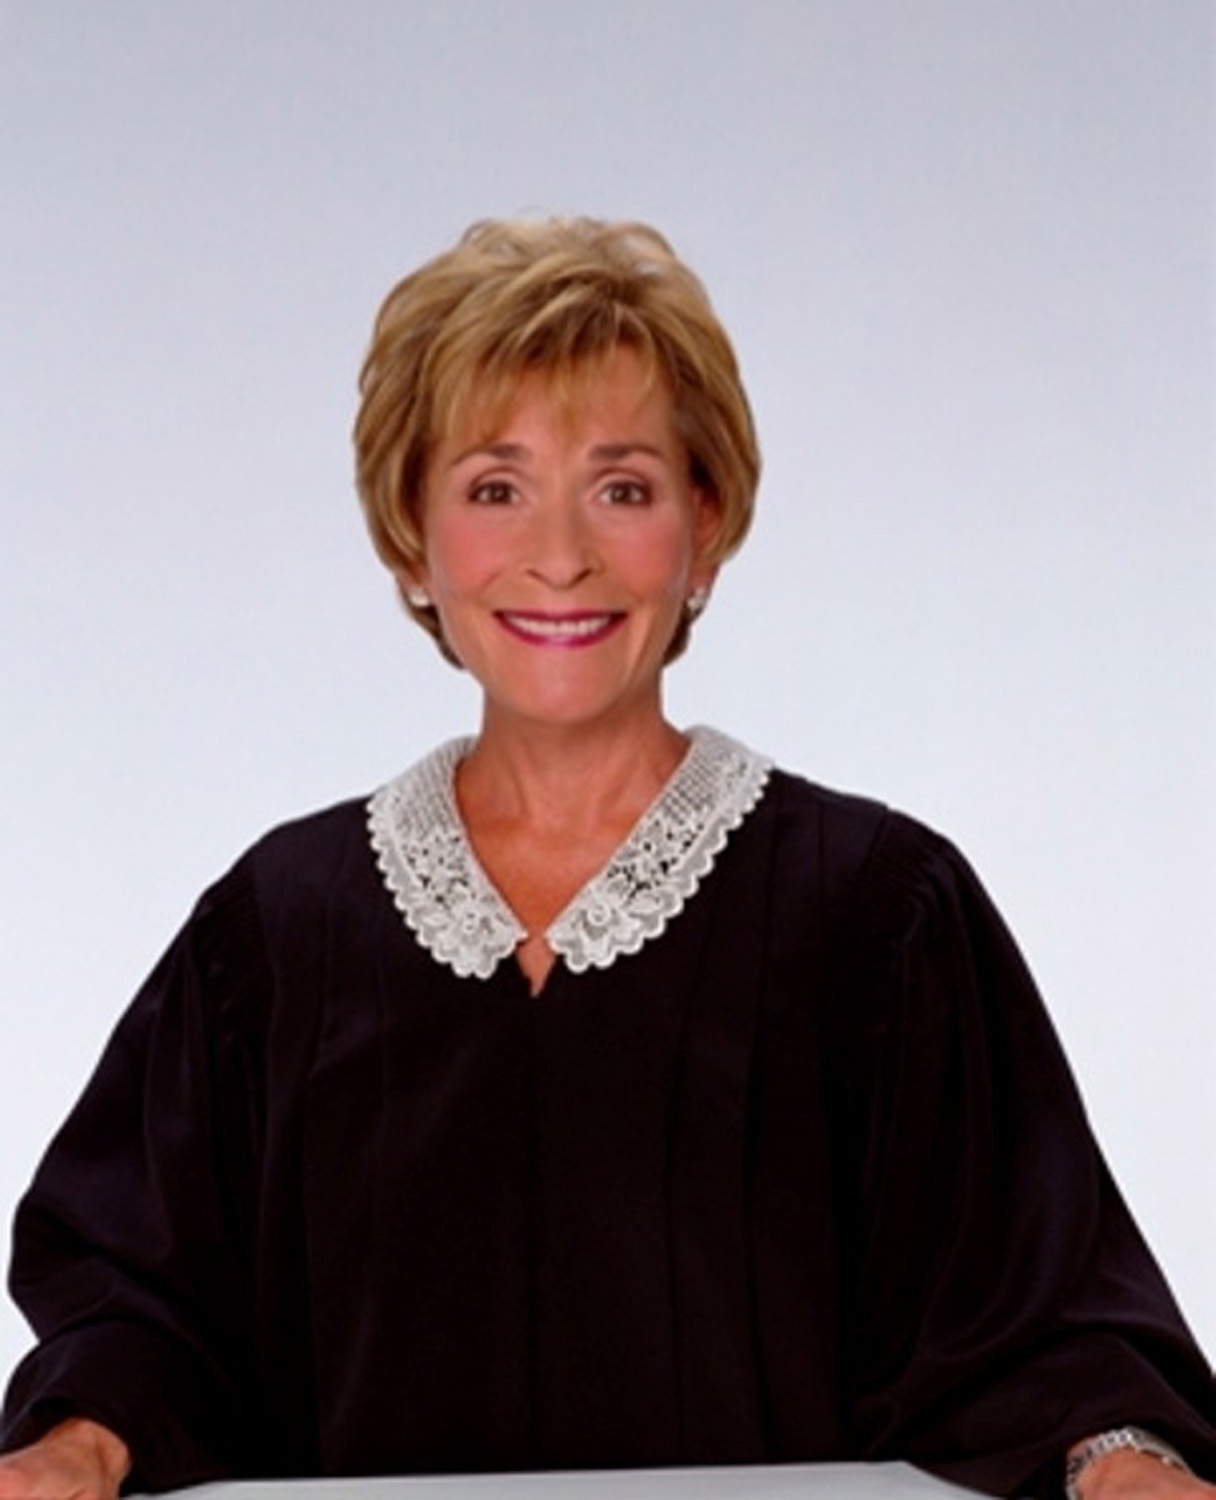 Heres how Judge Judy negotiated her $47 million salary